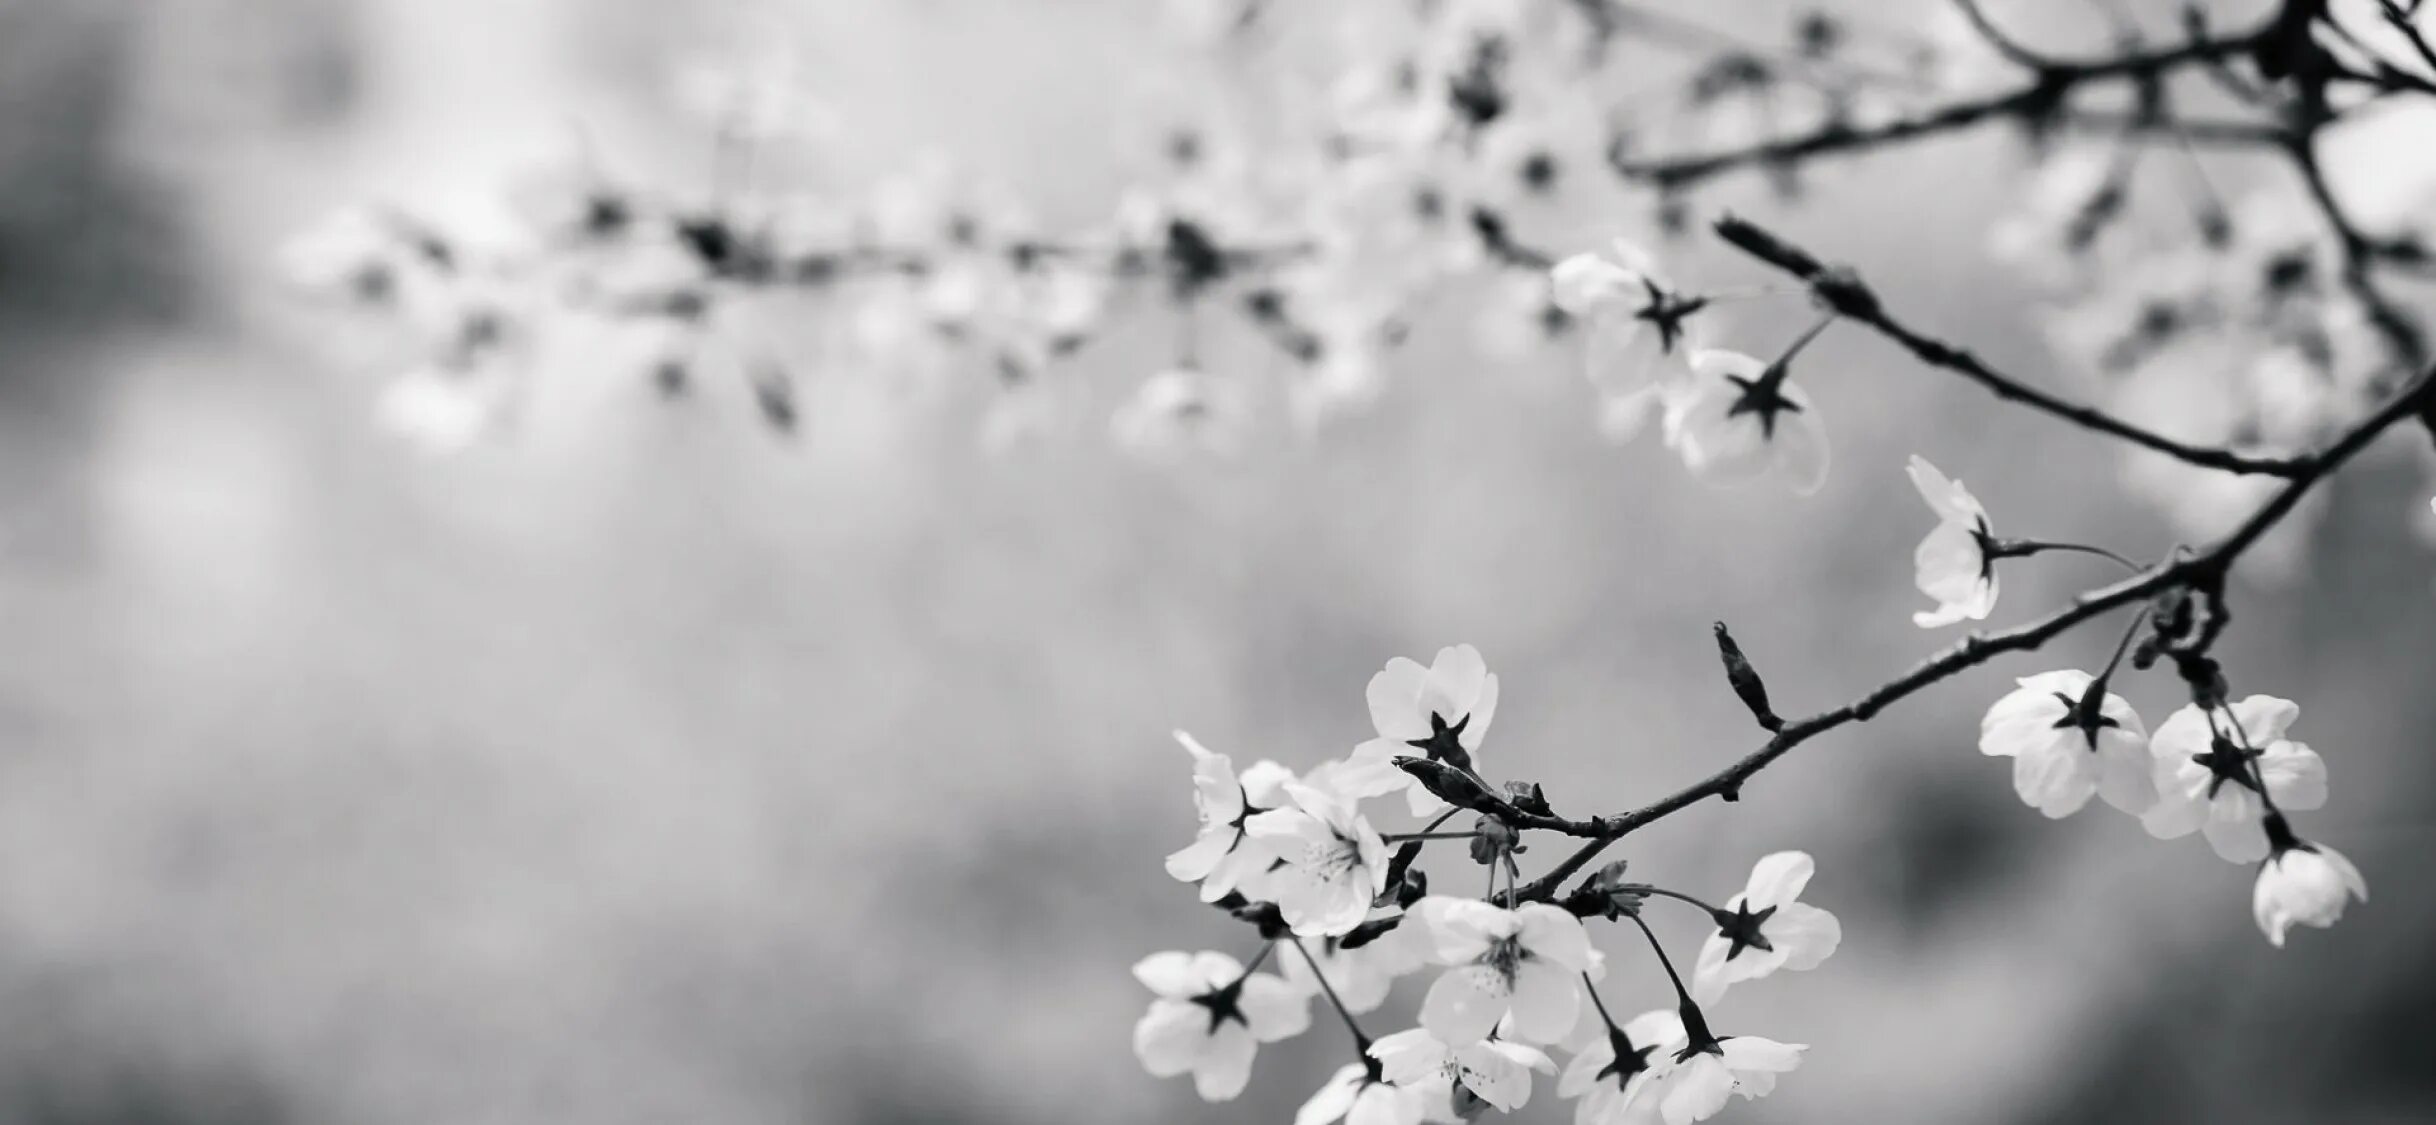 Black Blossom. White blossoms